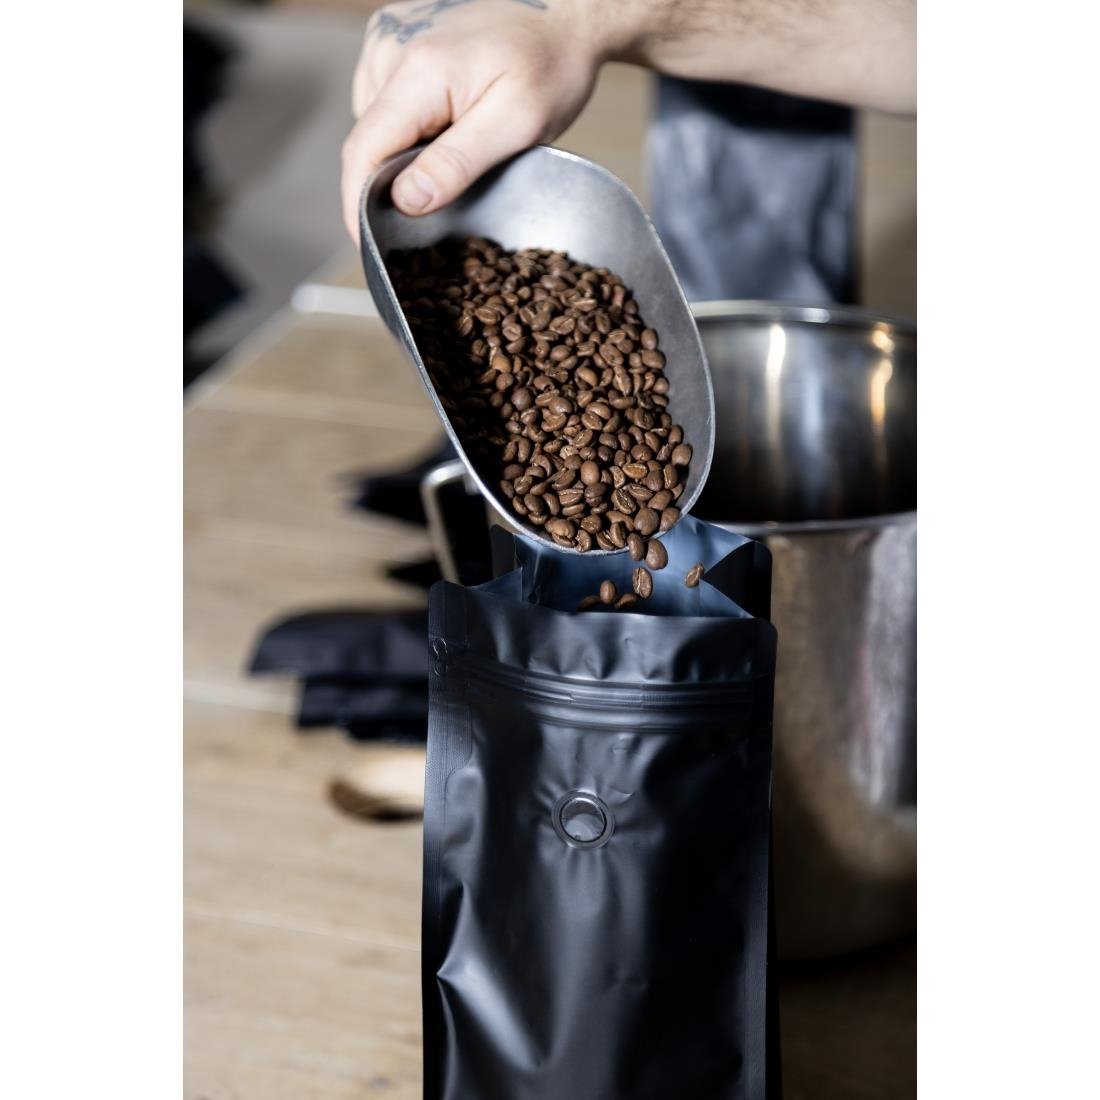 HS535 Beaumont No.4 Decaf Coffee Beans 1kg